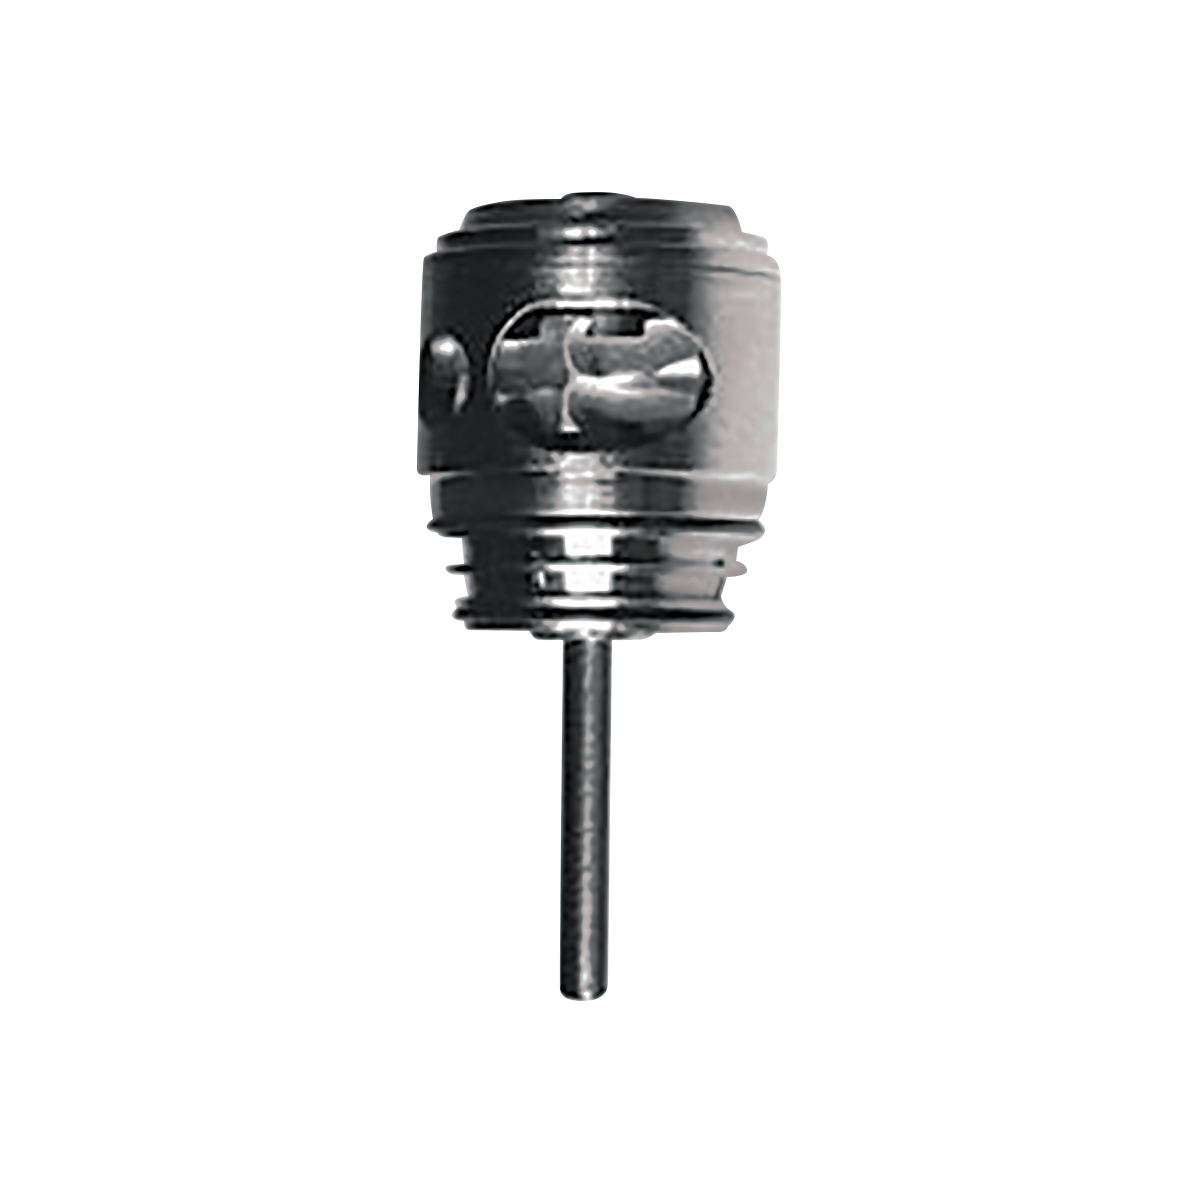 NSK S-Max M500 Push Button Turbine